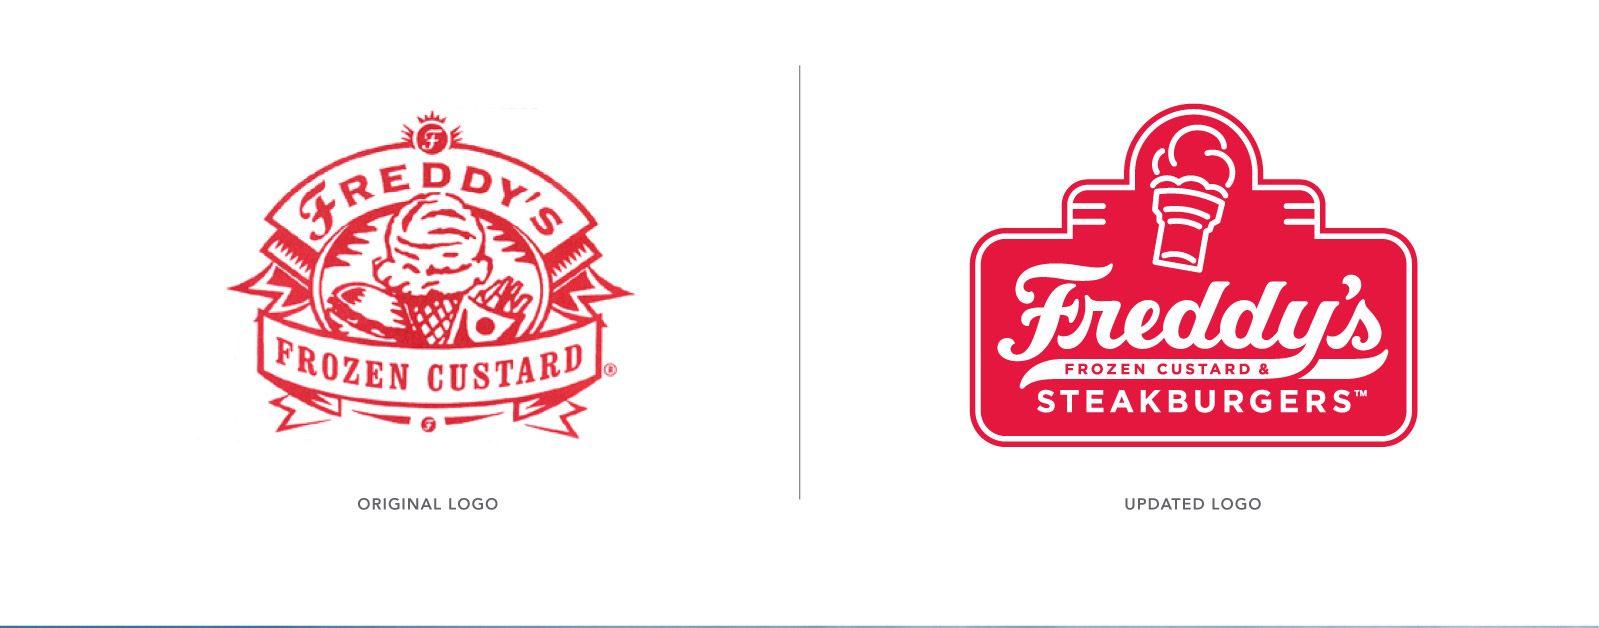 Freddy's Logo - Freddy's Frozen Custard & Steakburgers : O&H Brand Design